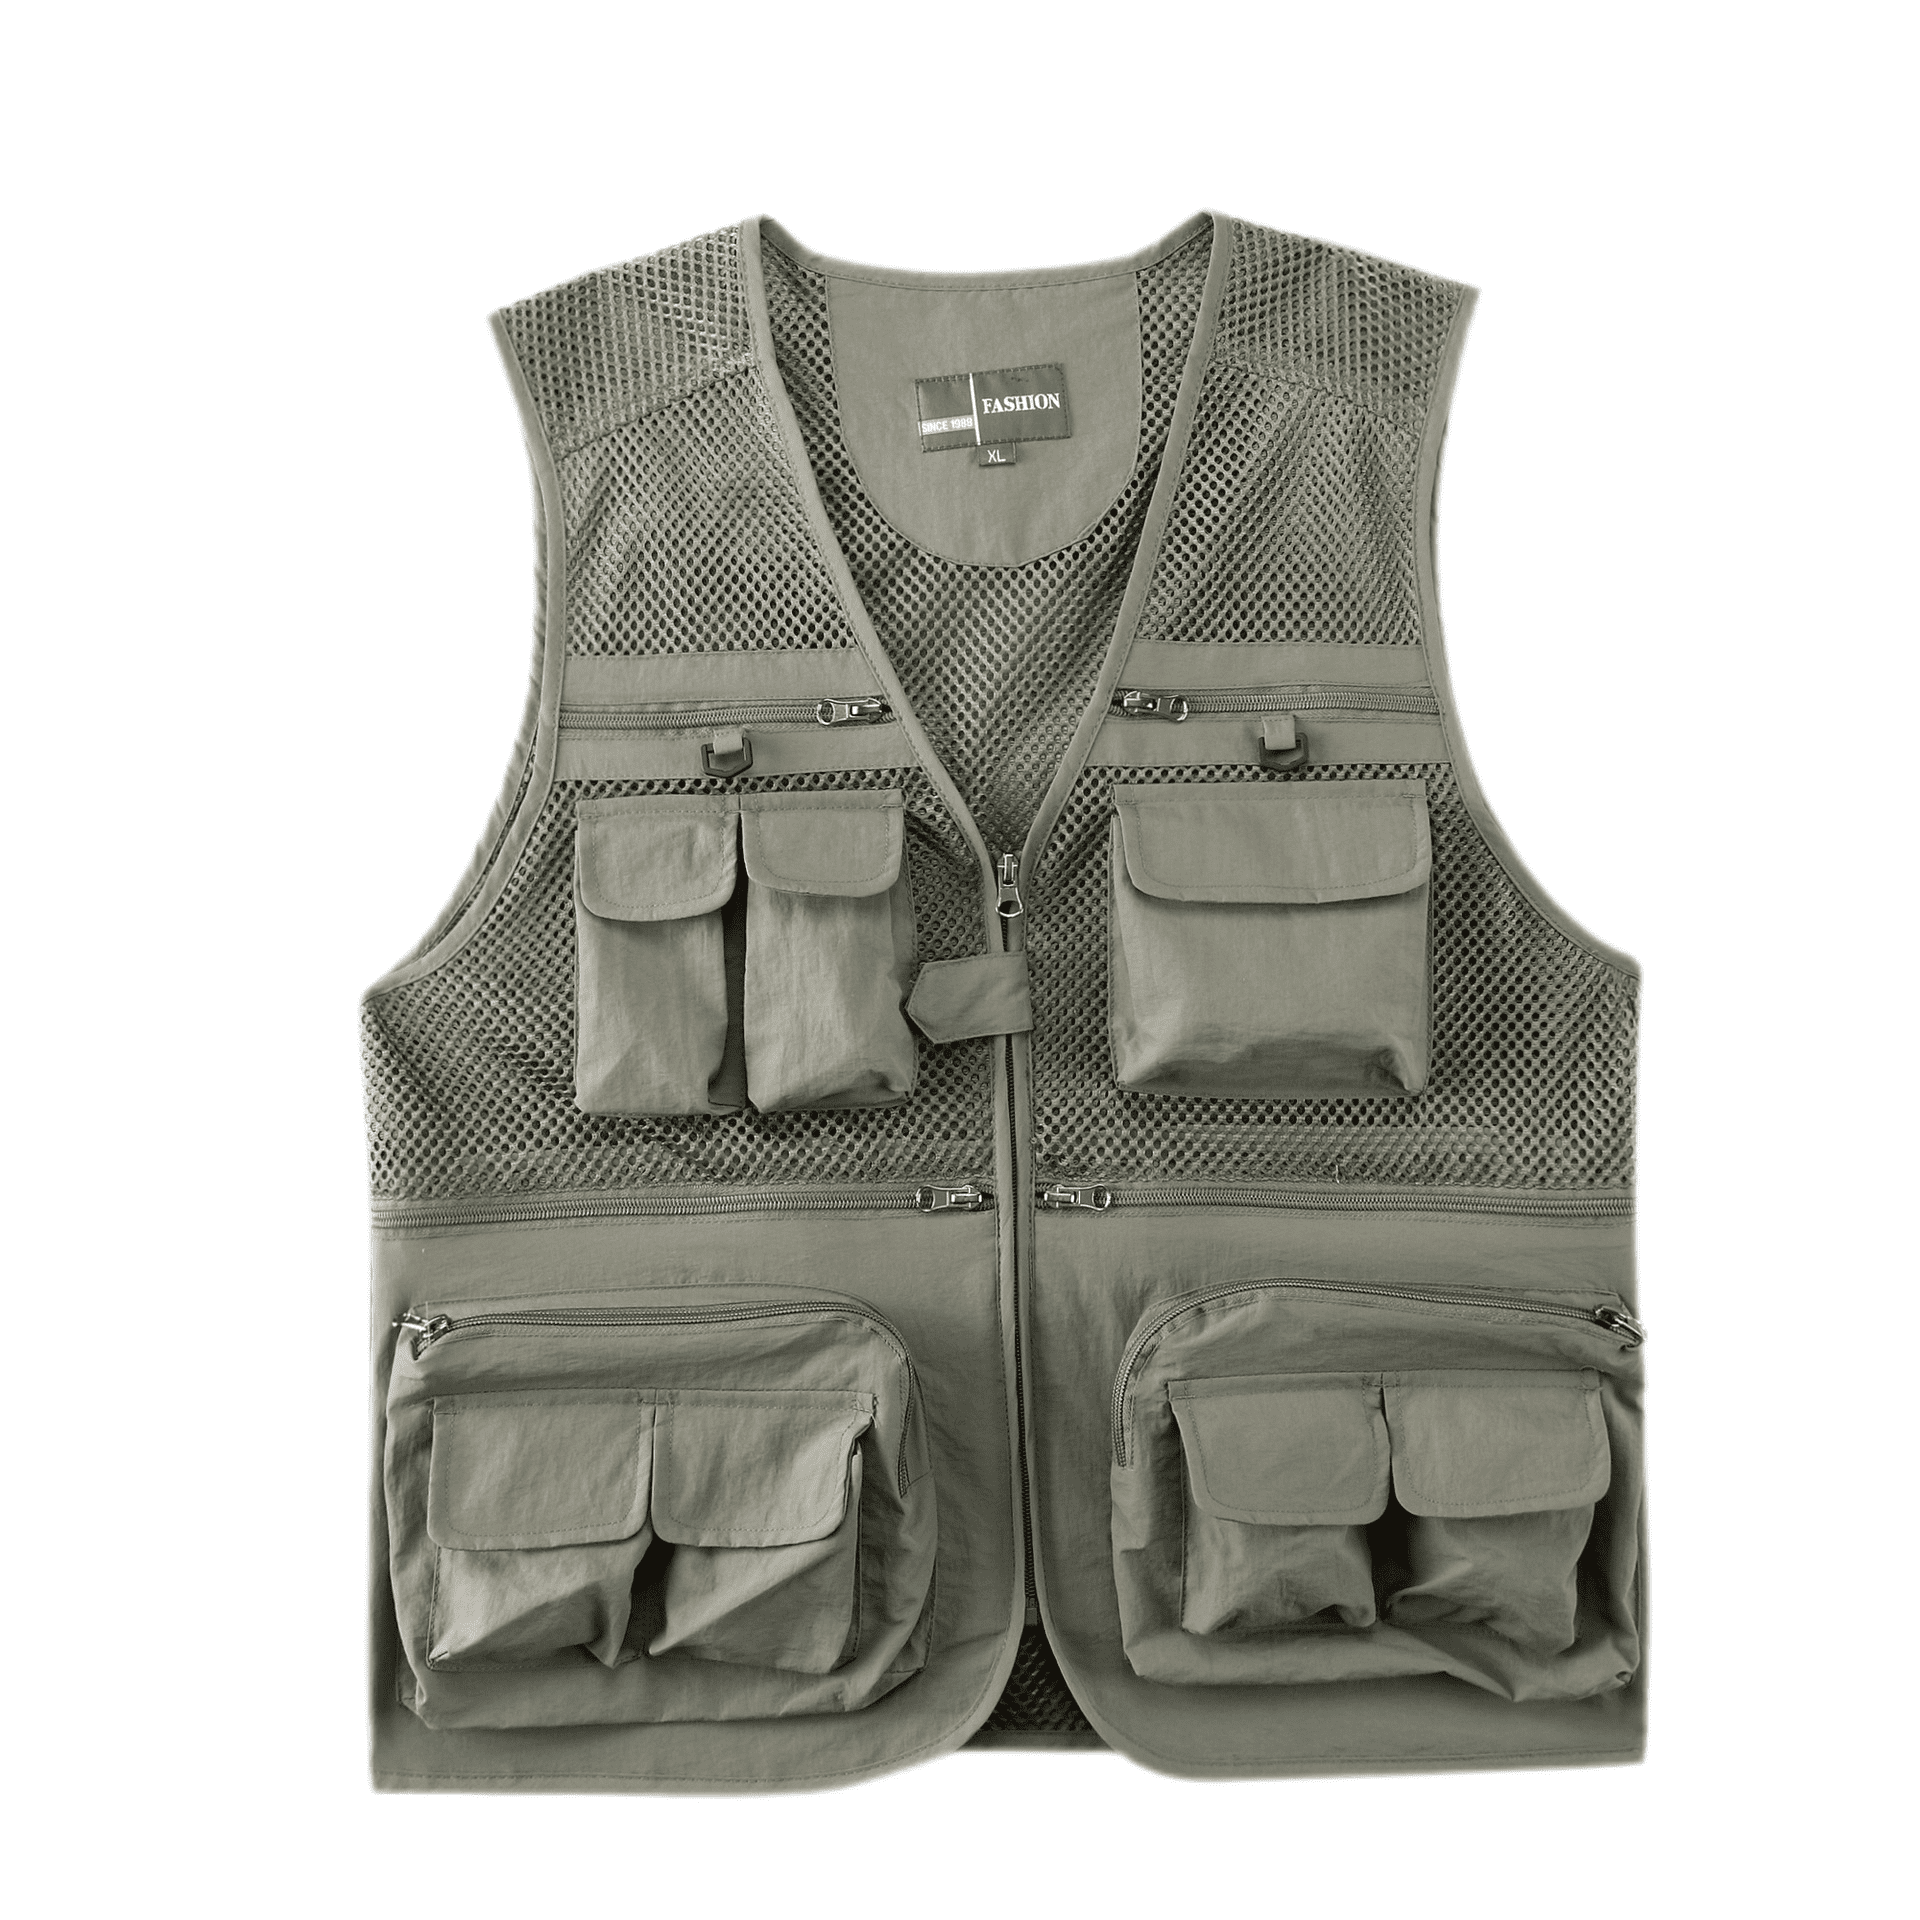 Miluxas Men's Fishing Vest Summer Outdoor Work Safari Travel Photo Vests  with Multi Pockets for Men Clearance Orange 14(XXXXXL) 